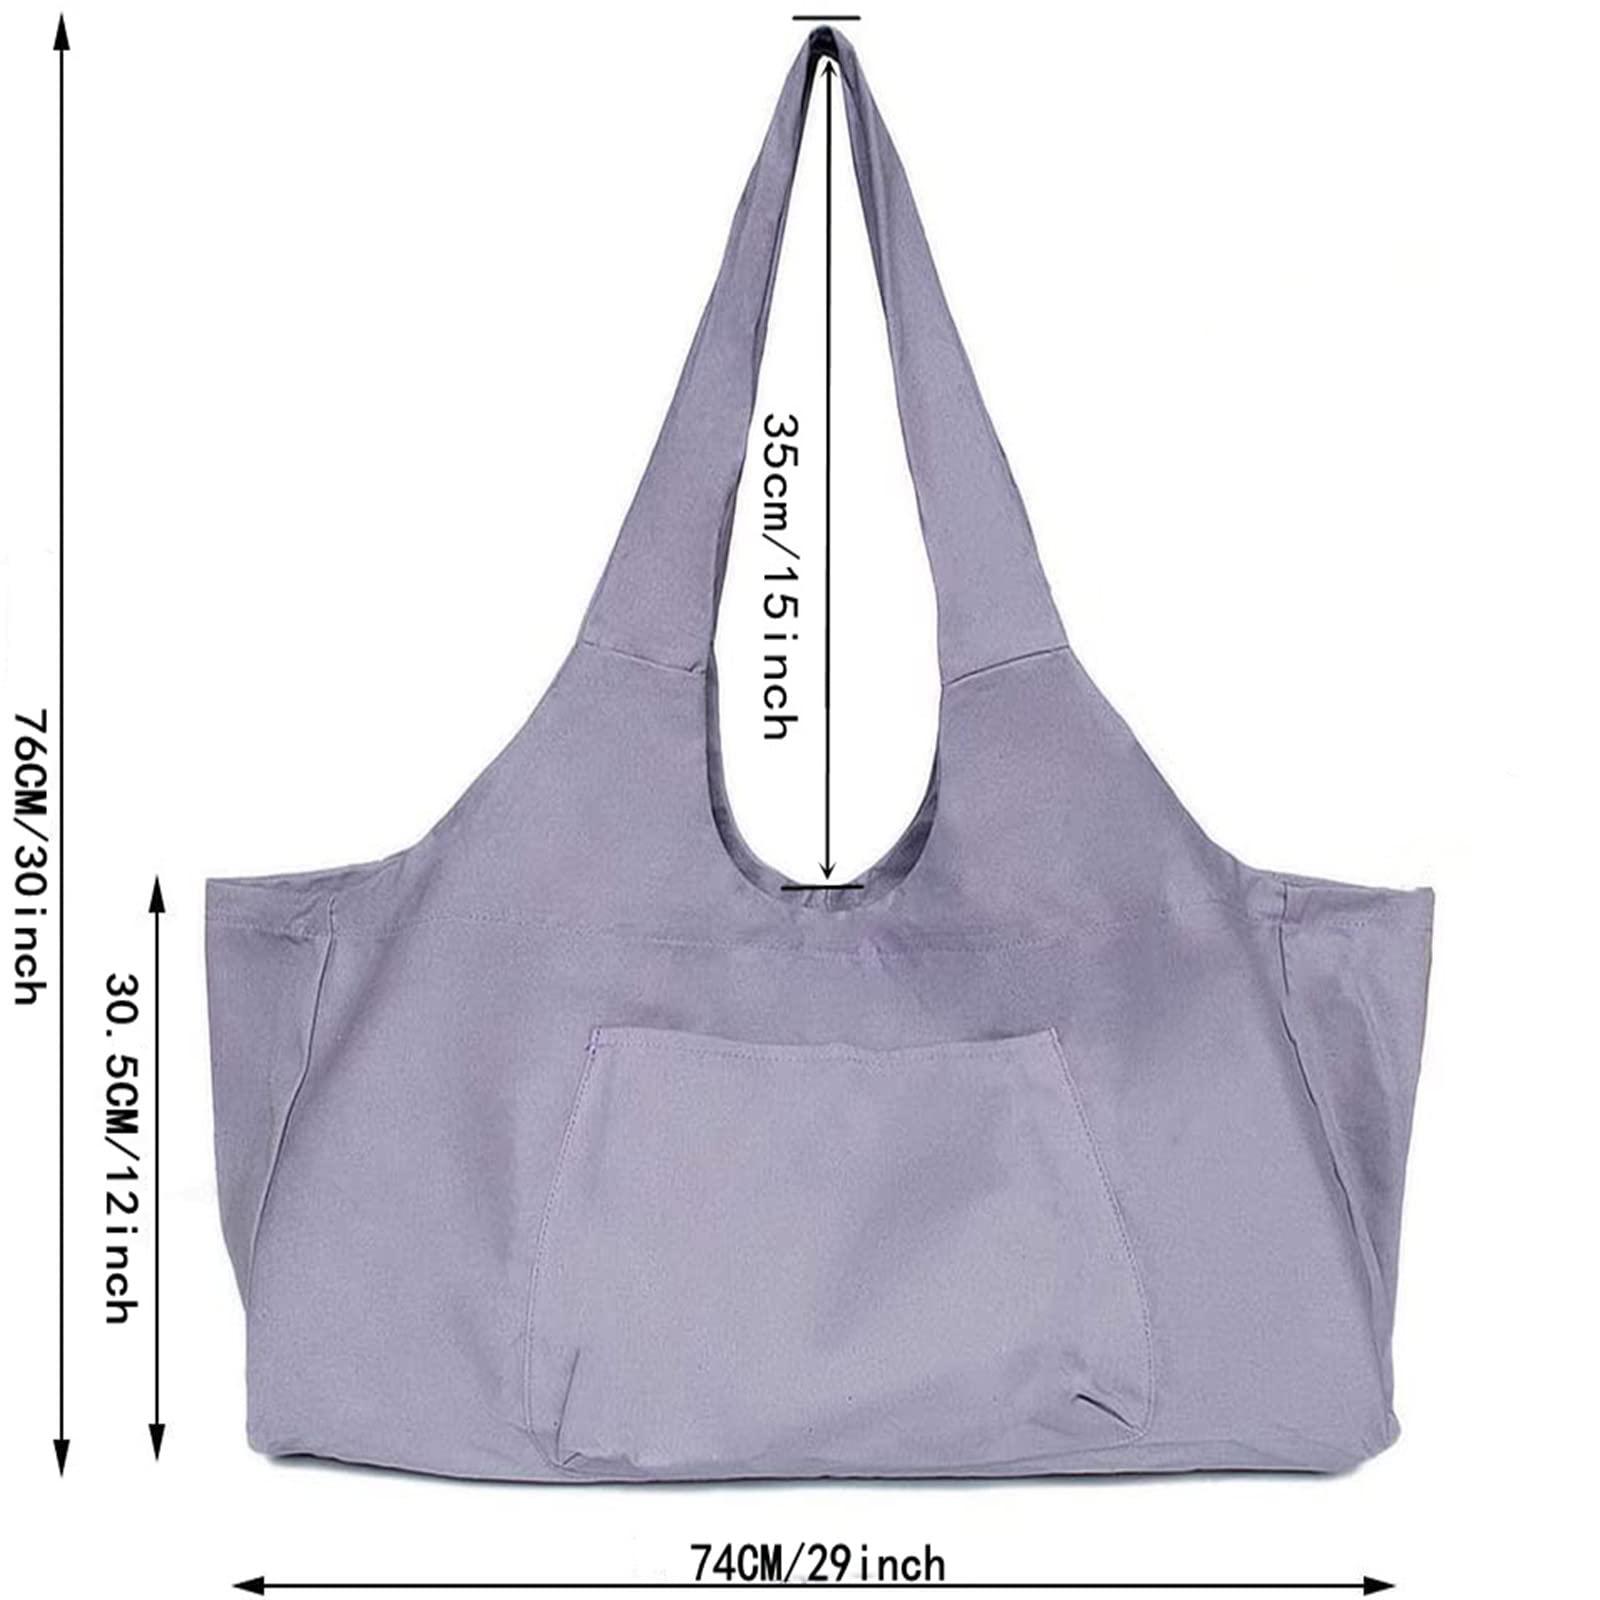 3DTengkit Yoga Bag Large Yoga Mat Bag,Canvas Yoga mat Tote Bag with Inside Zip Pocket Fits Most Size Mats (black) 2